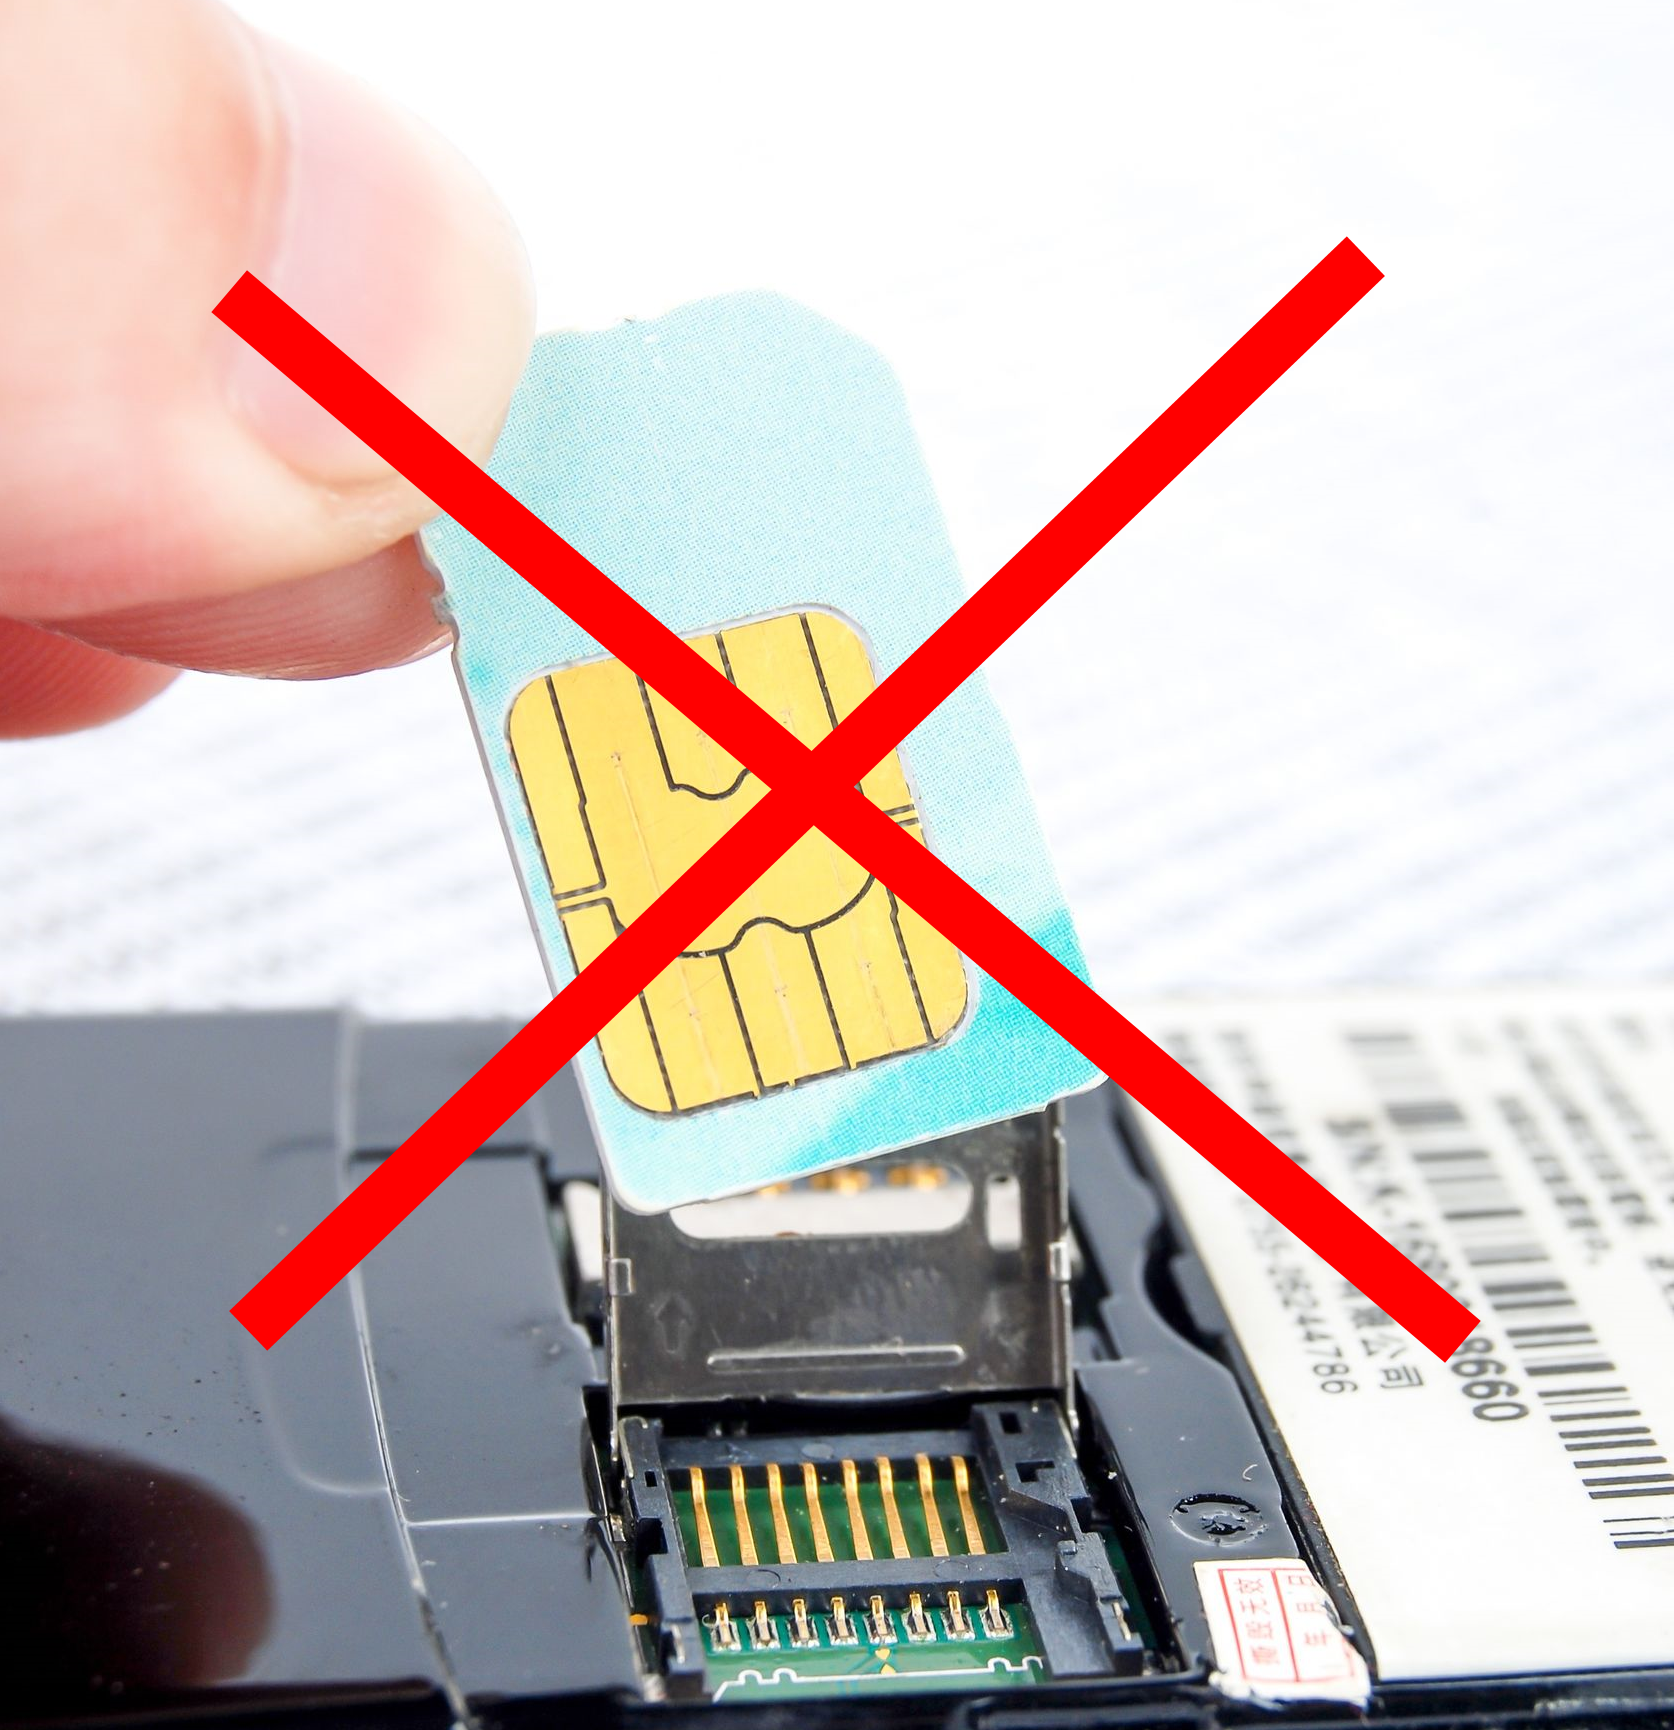 No conventional plastic SIM cards in the COMOTIX detector